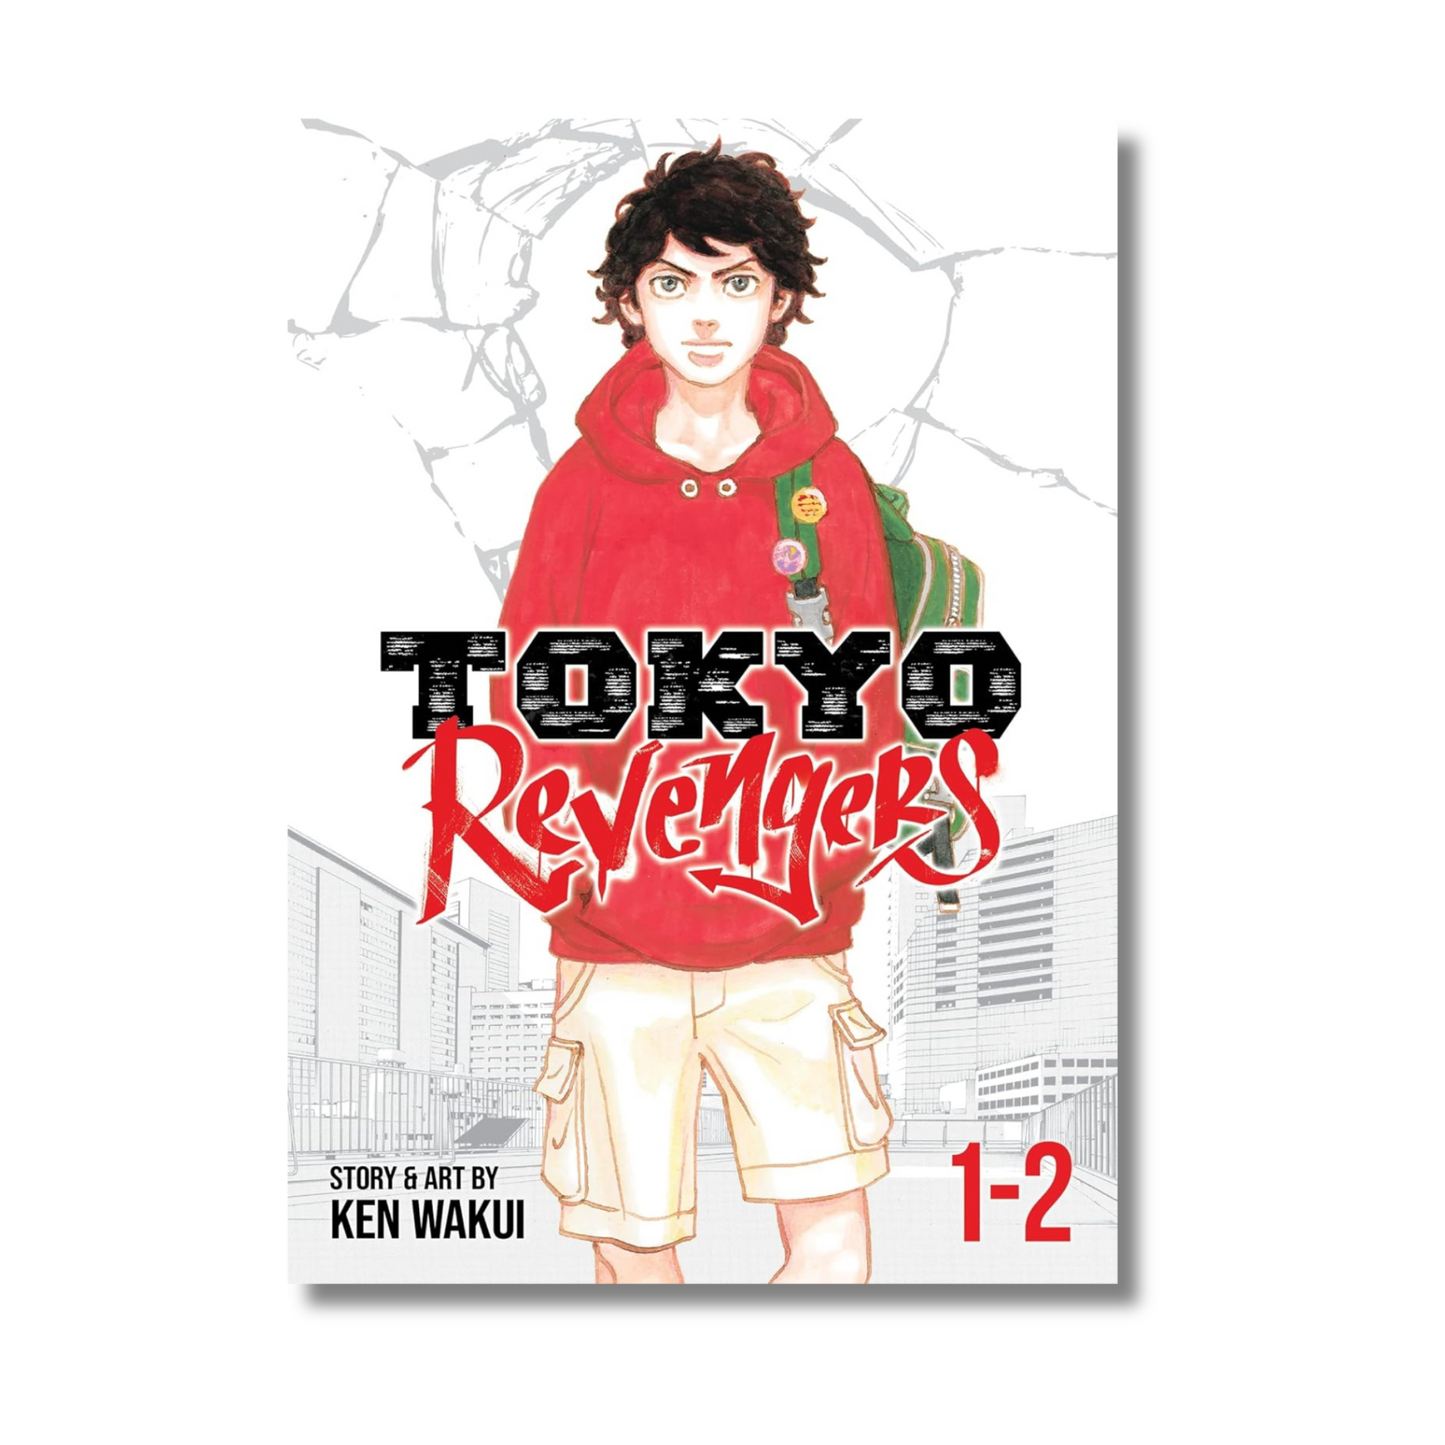 Tokyo Revengers (Omnibus) Vol. 1-2 By Ken Wakui (Paperback)